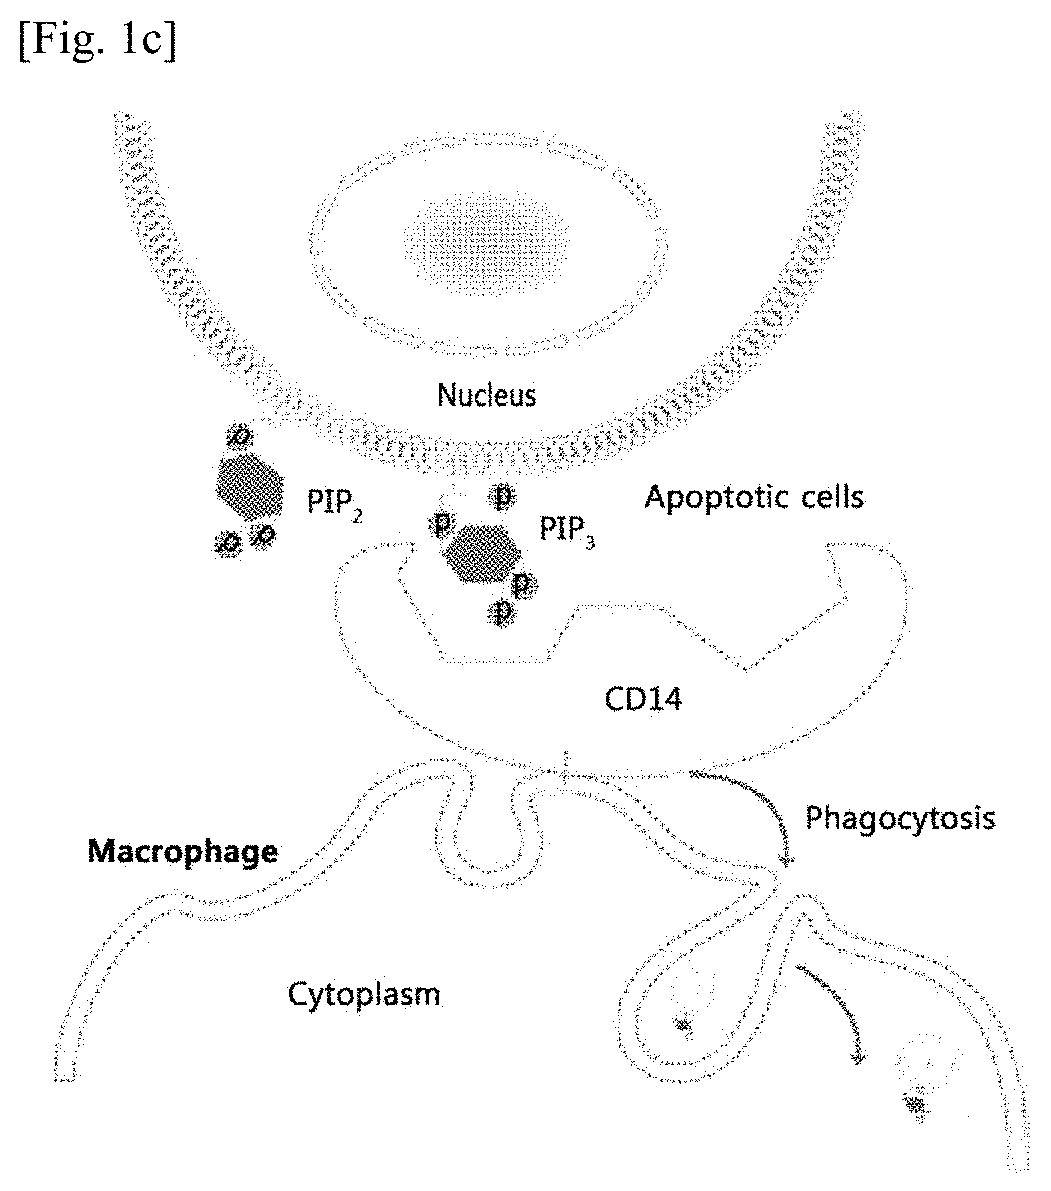 Use of phosphatidylinositol phosphate-binding material for apoptosis detection